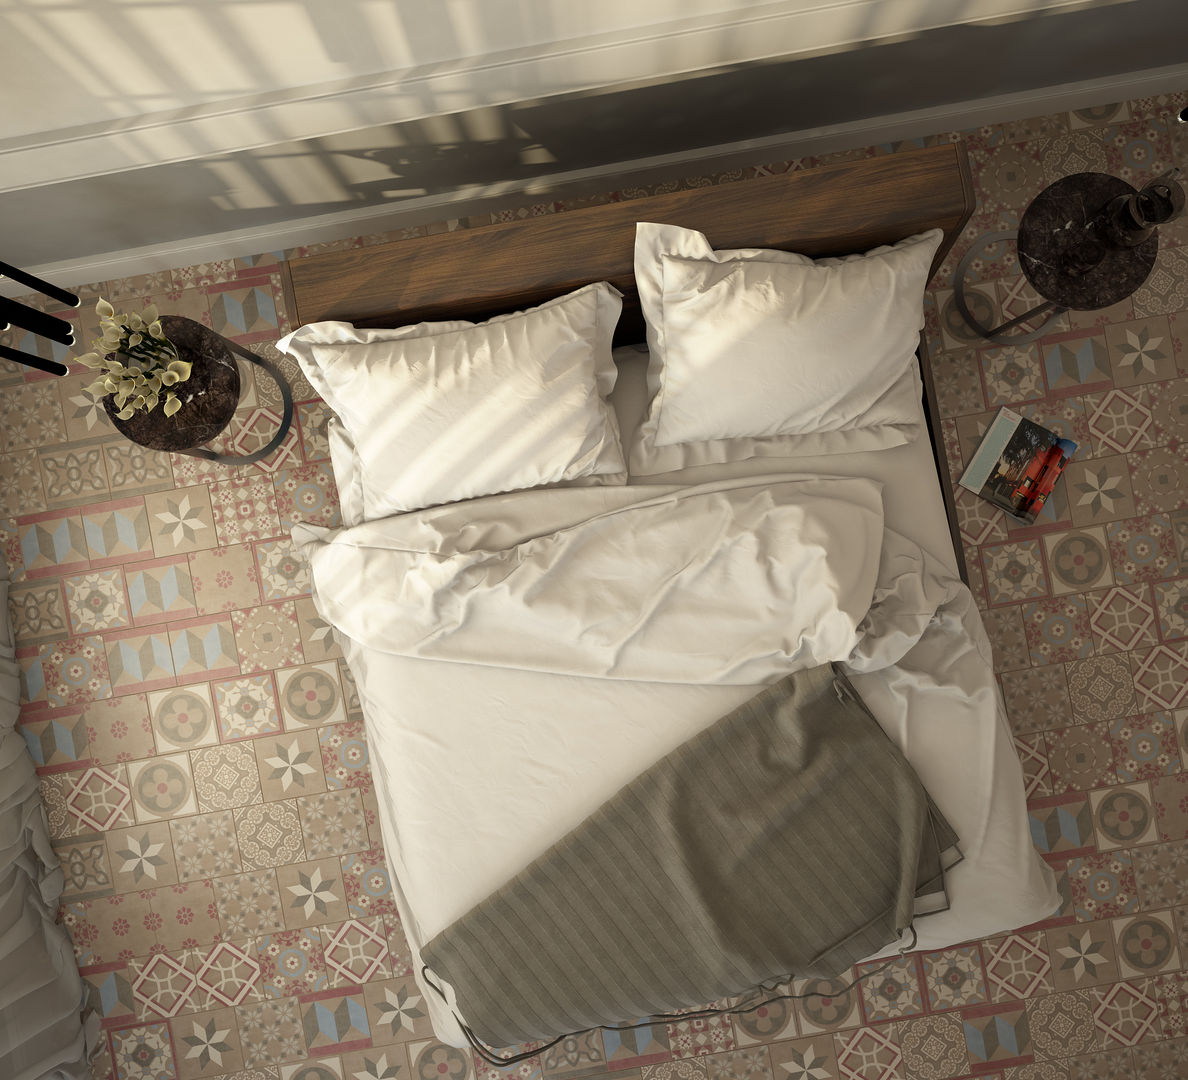 Catalogo Pirrera Cement, olivia Sciuto olivia Sciuto Modern style bedroom